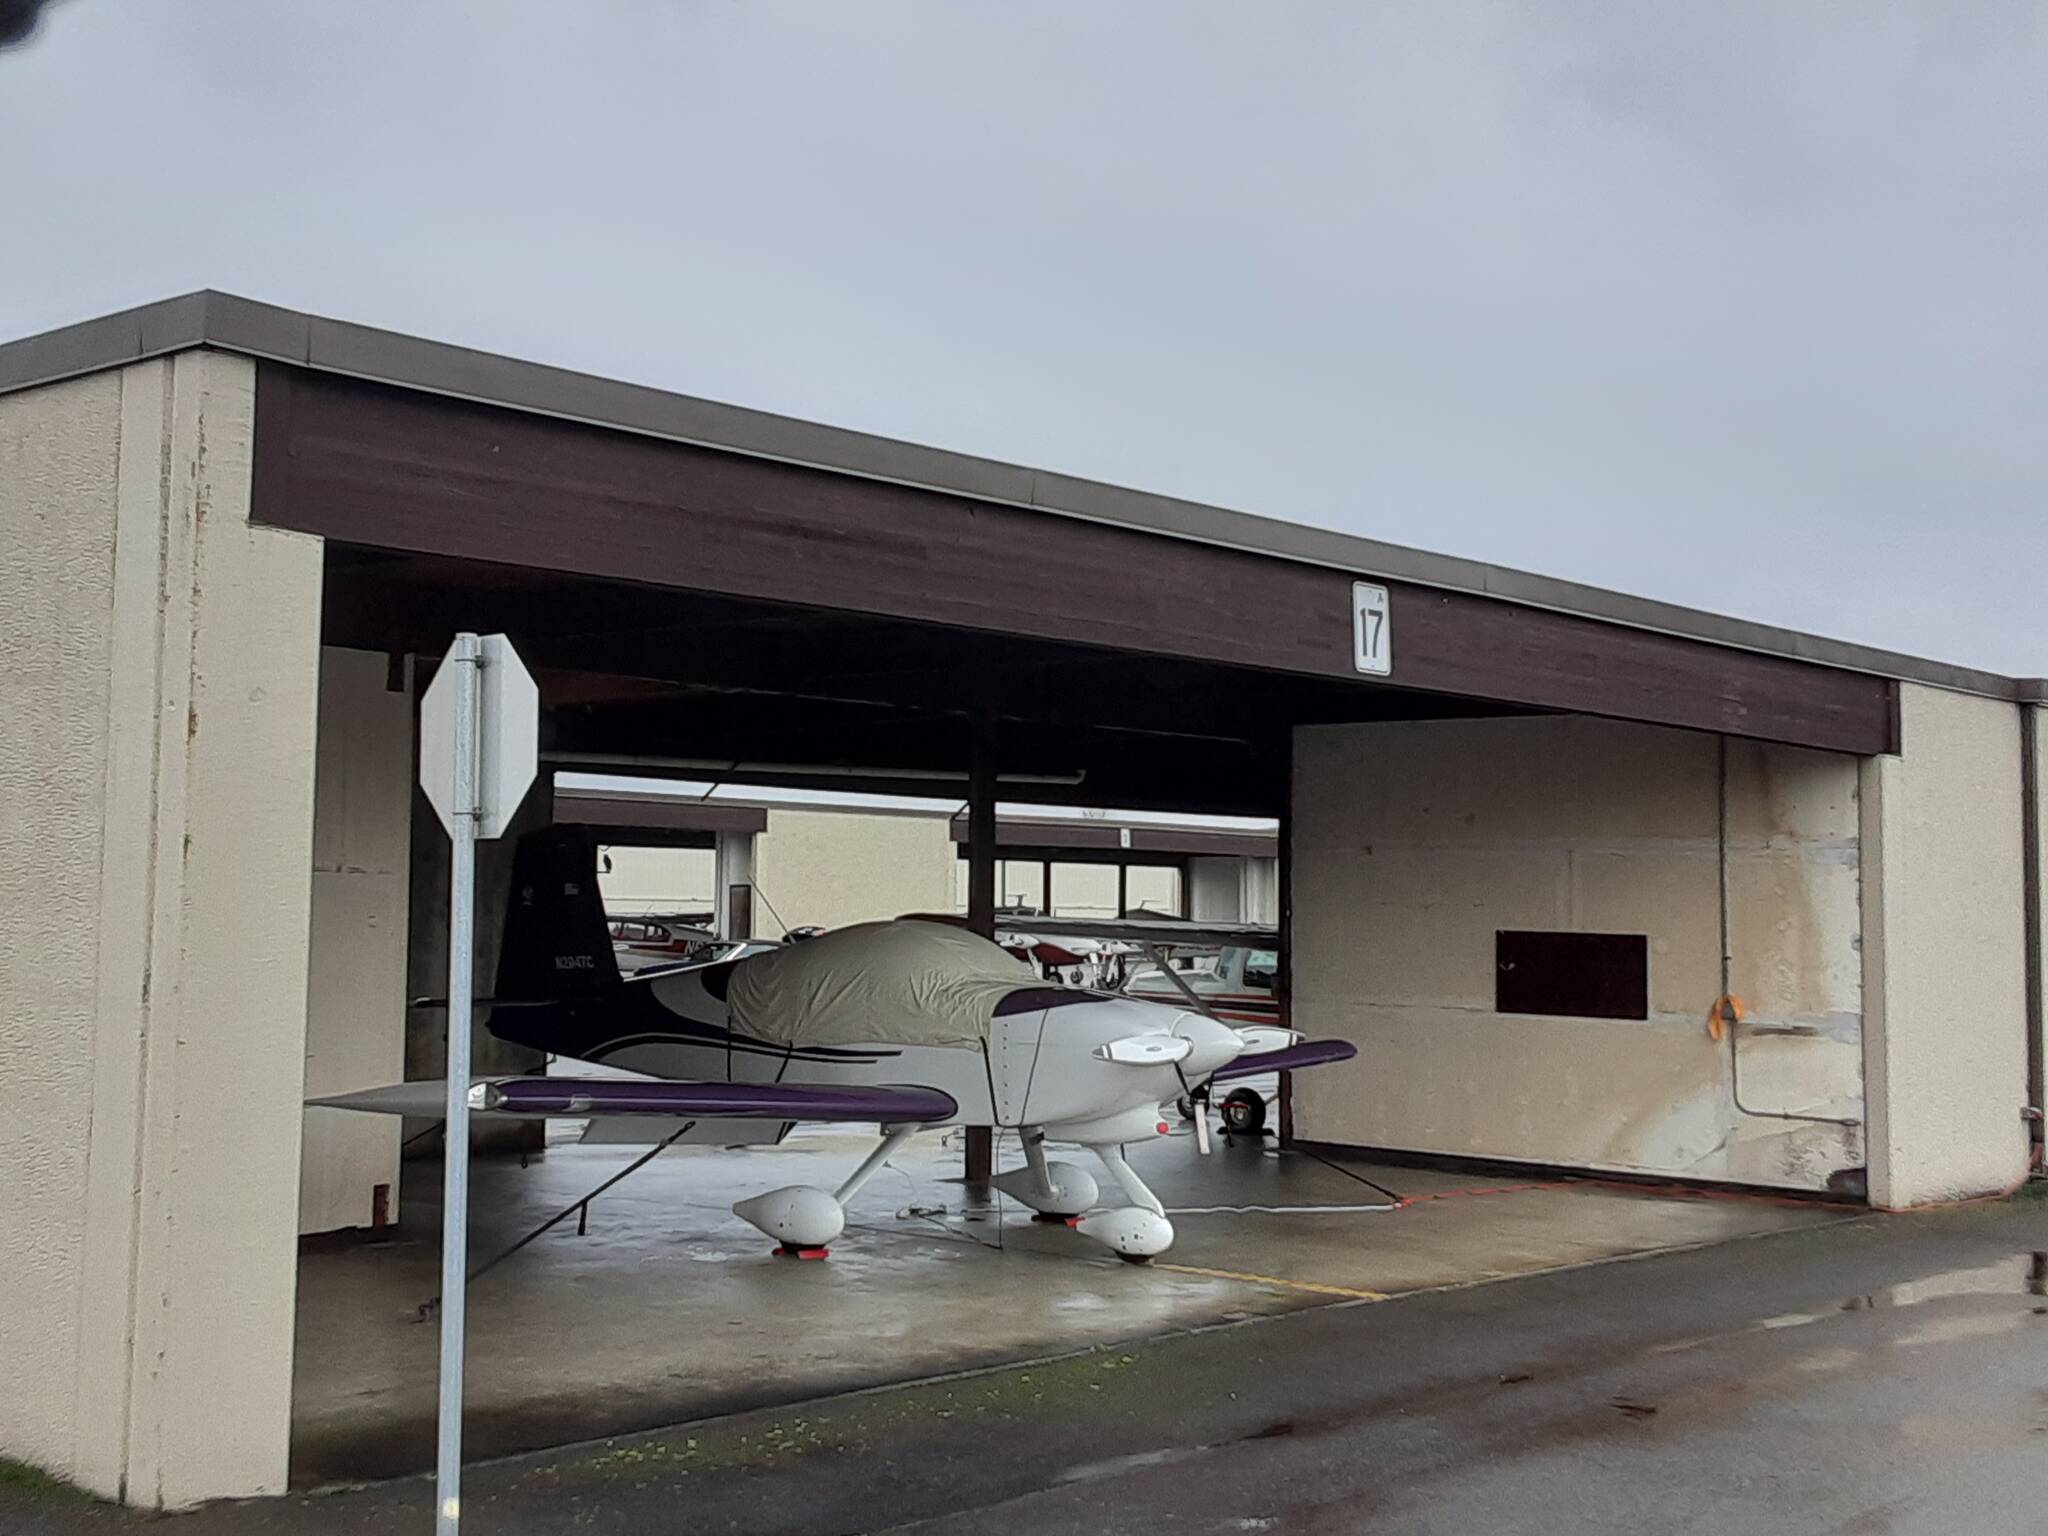 File photo
Auburn Municipal Airport hangar.